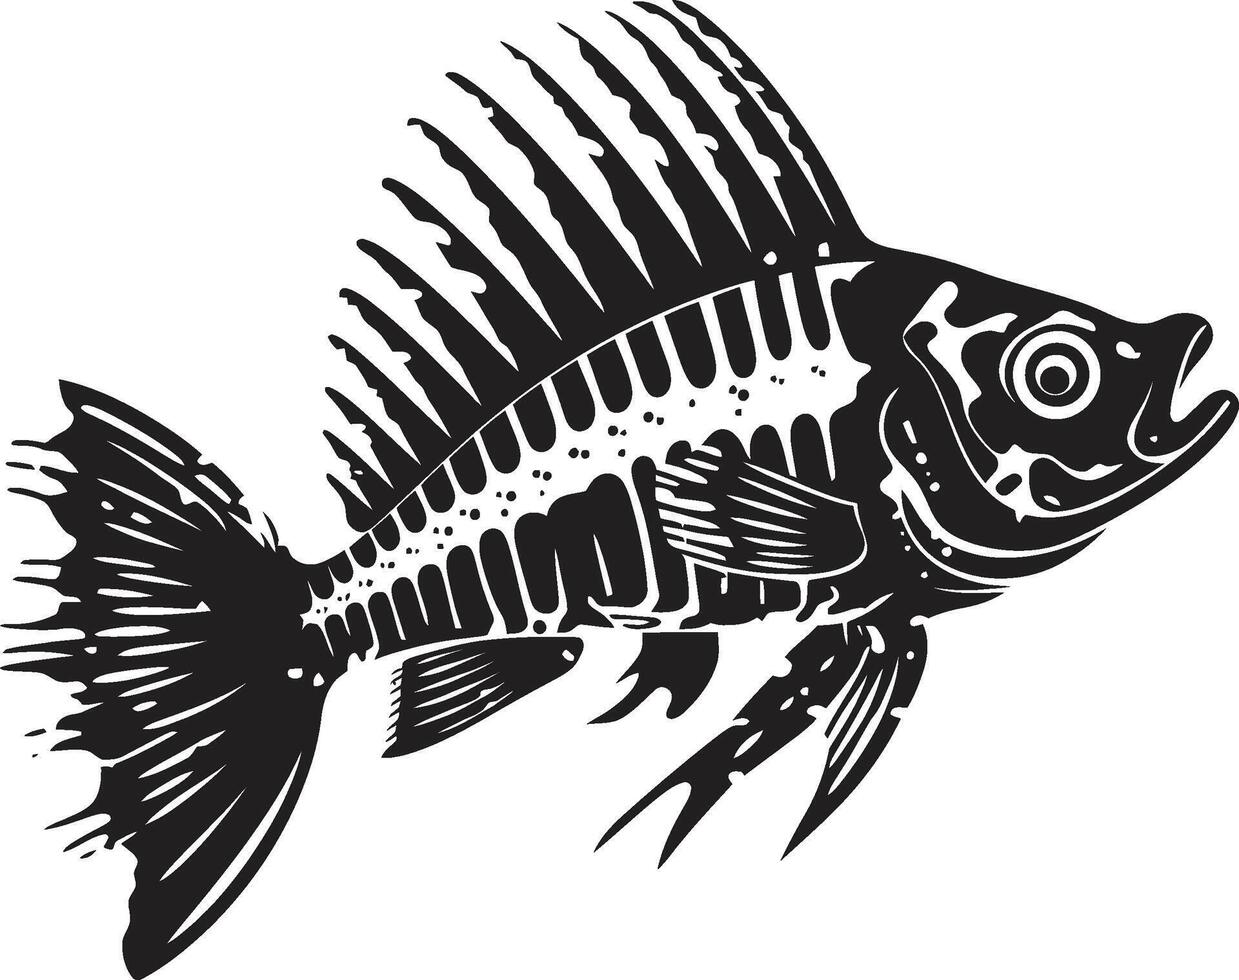 ben kylning närvaro rovdjur fisk skelett logotyp i elegant svart makaber morfologi svart ikon design av rovdjur fisk skelett vektor